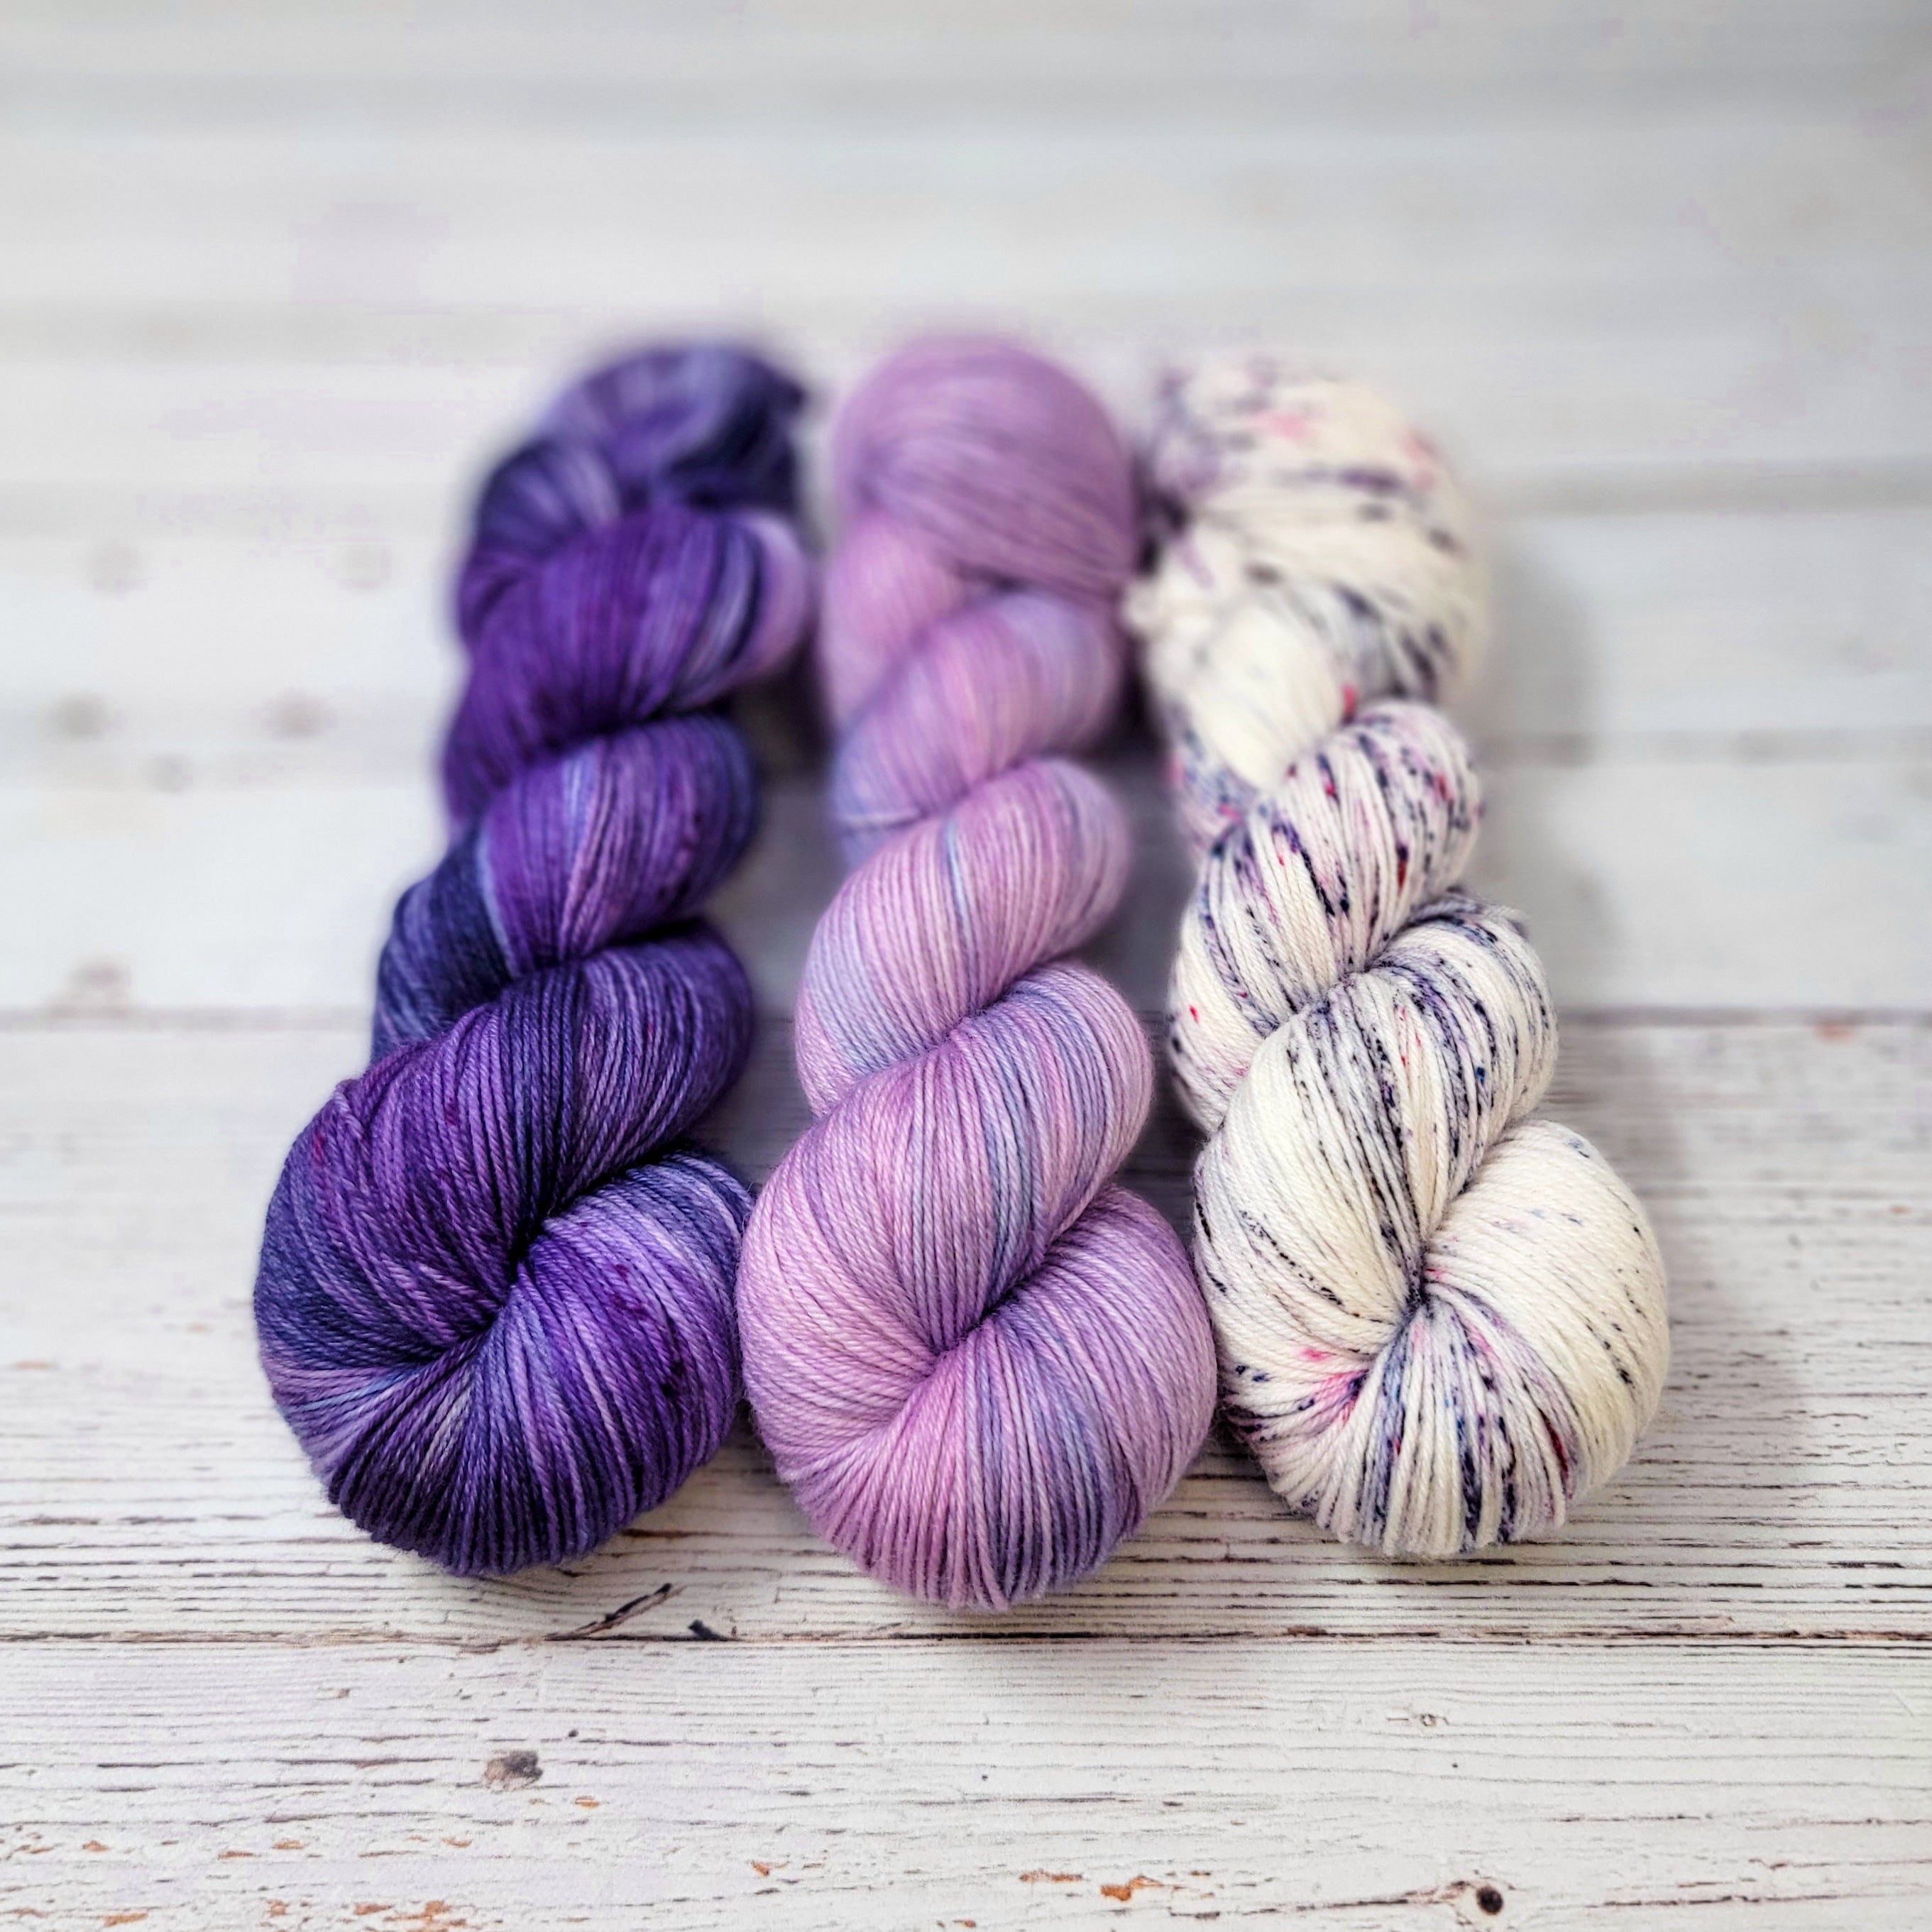 EGGPLANT Hand-Dyed Yarn on Squoosh DK made by Purple Lamb